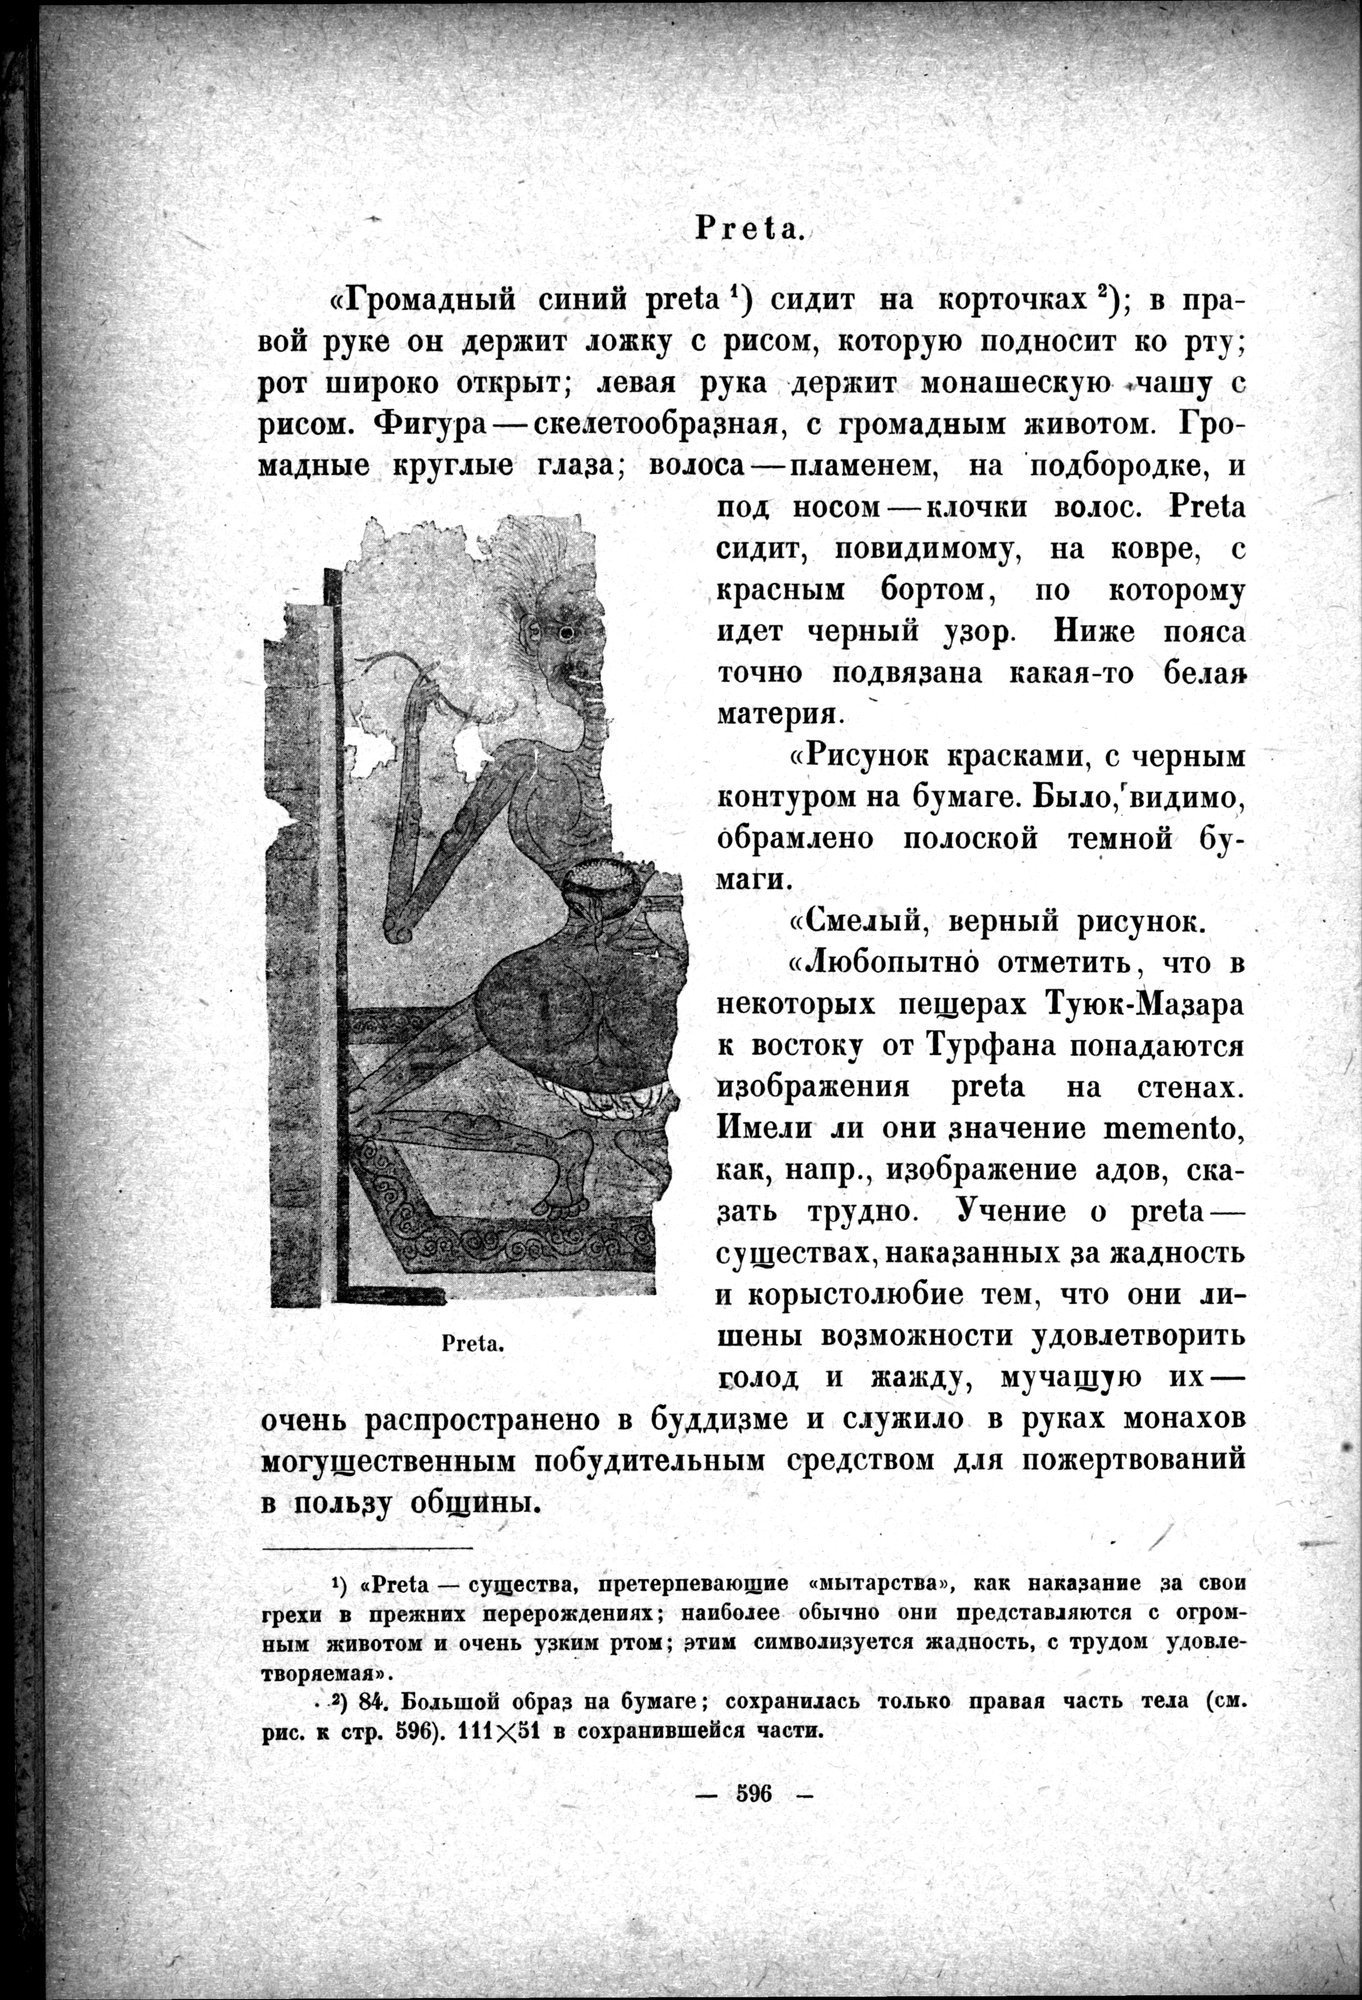 Mongoliya i Amdo i mertby gorod Khara-Khoto : vol.1 / Page 682 (Grayscale High Resolution Image)